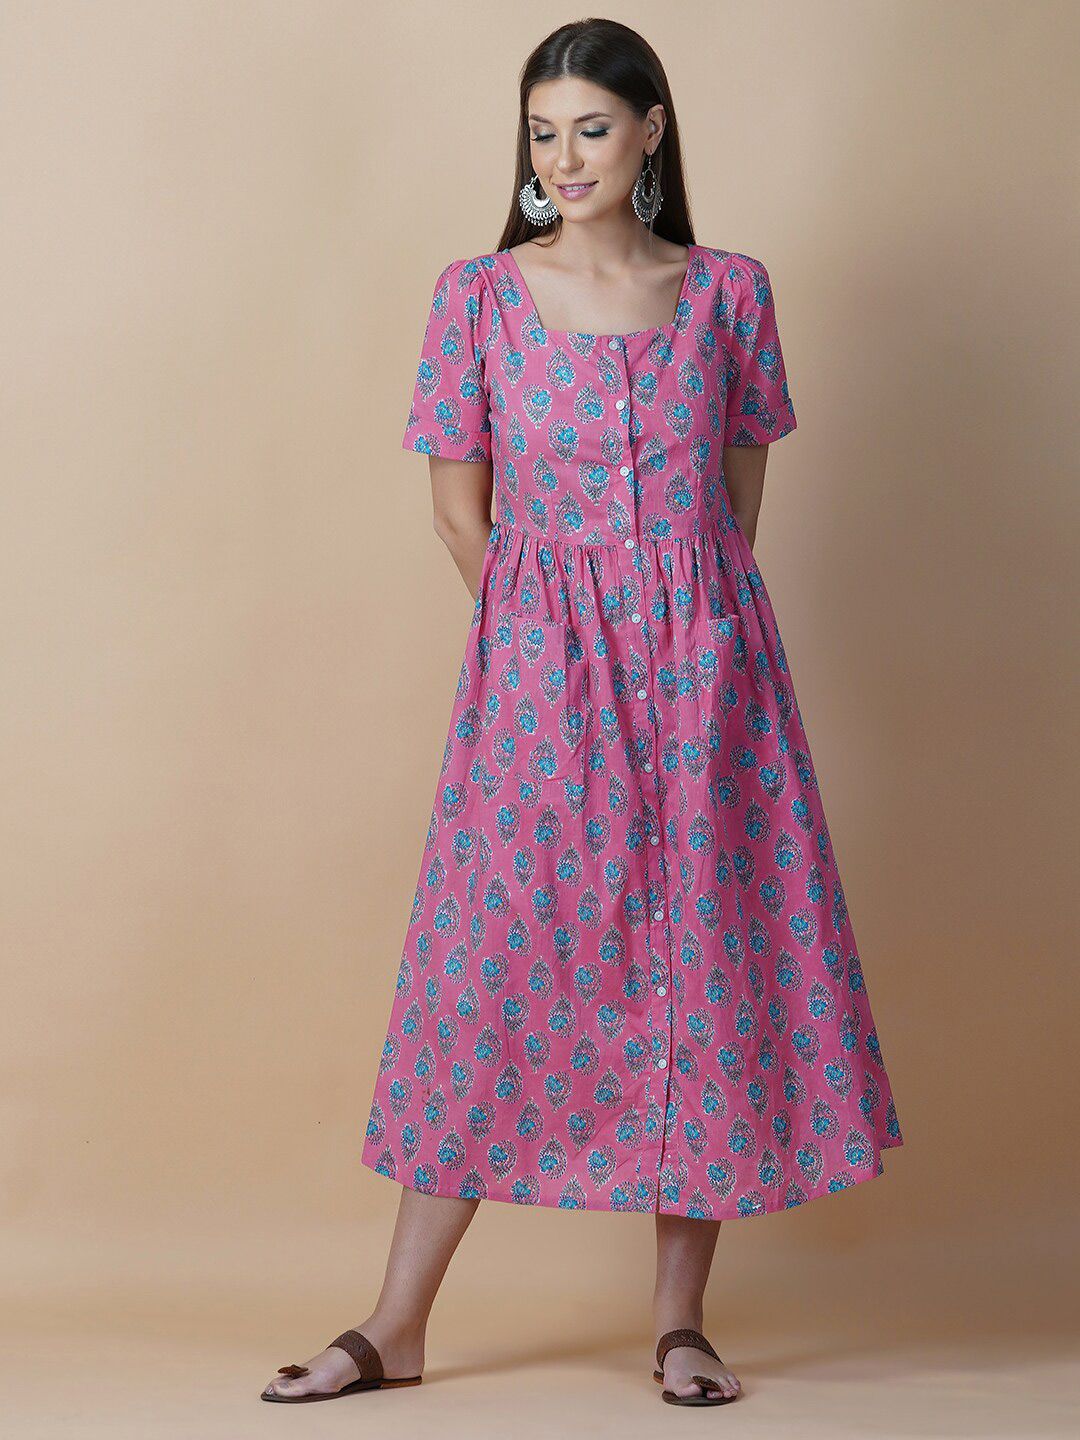 Twilldor Pink Cotton Floral Ethnic Midi Dress Price in India